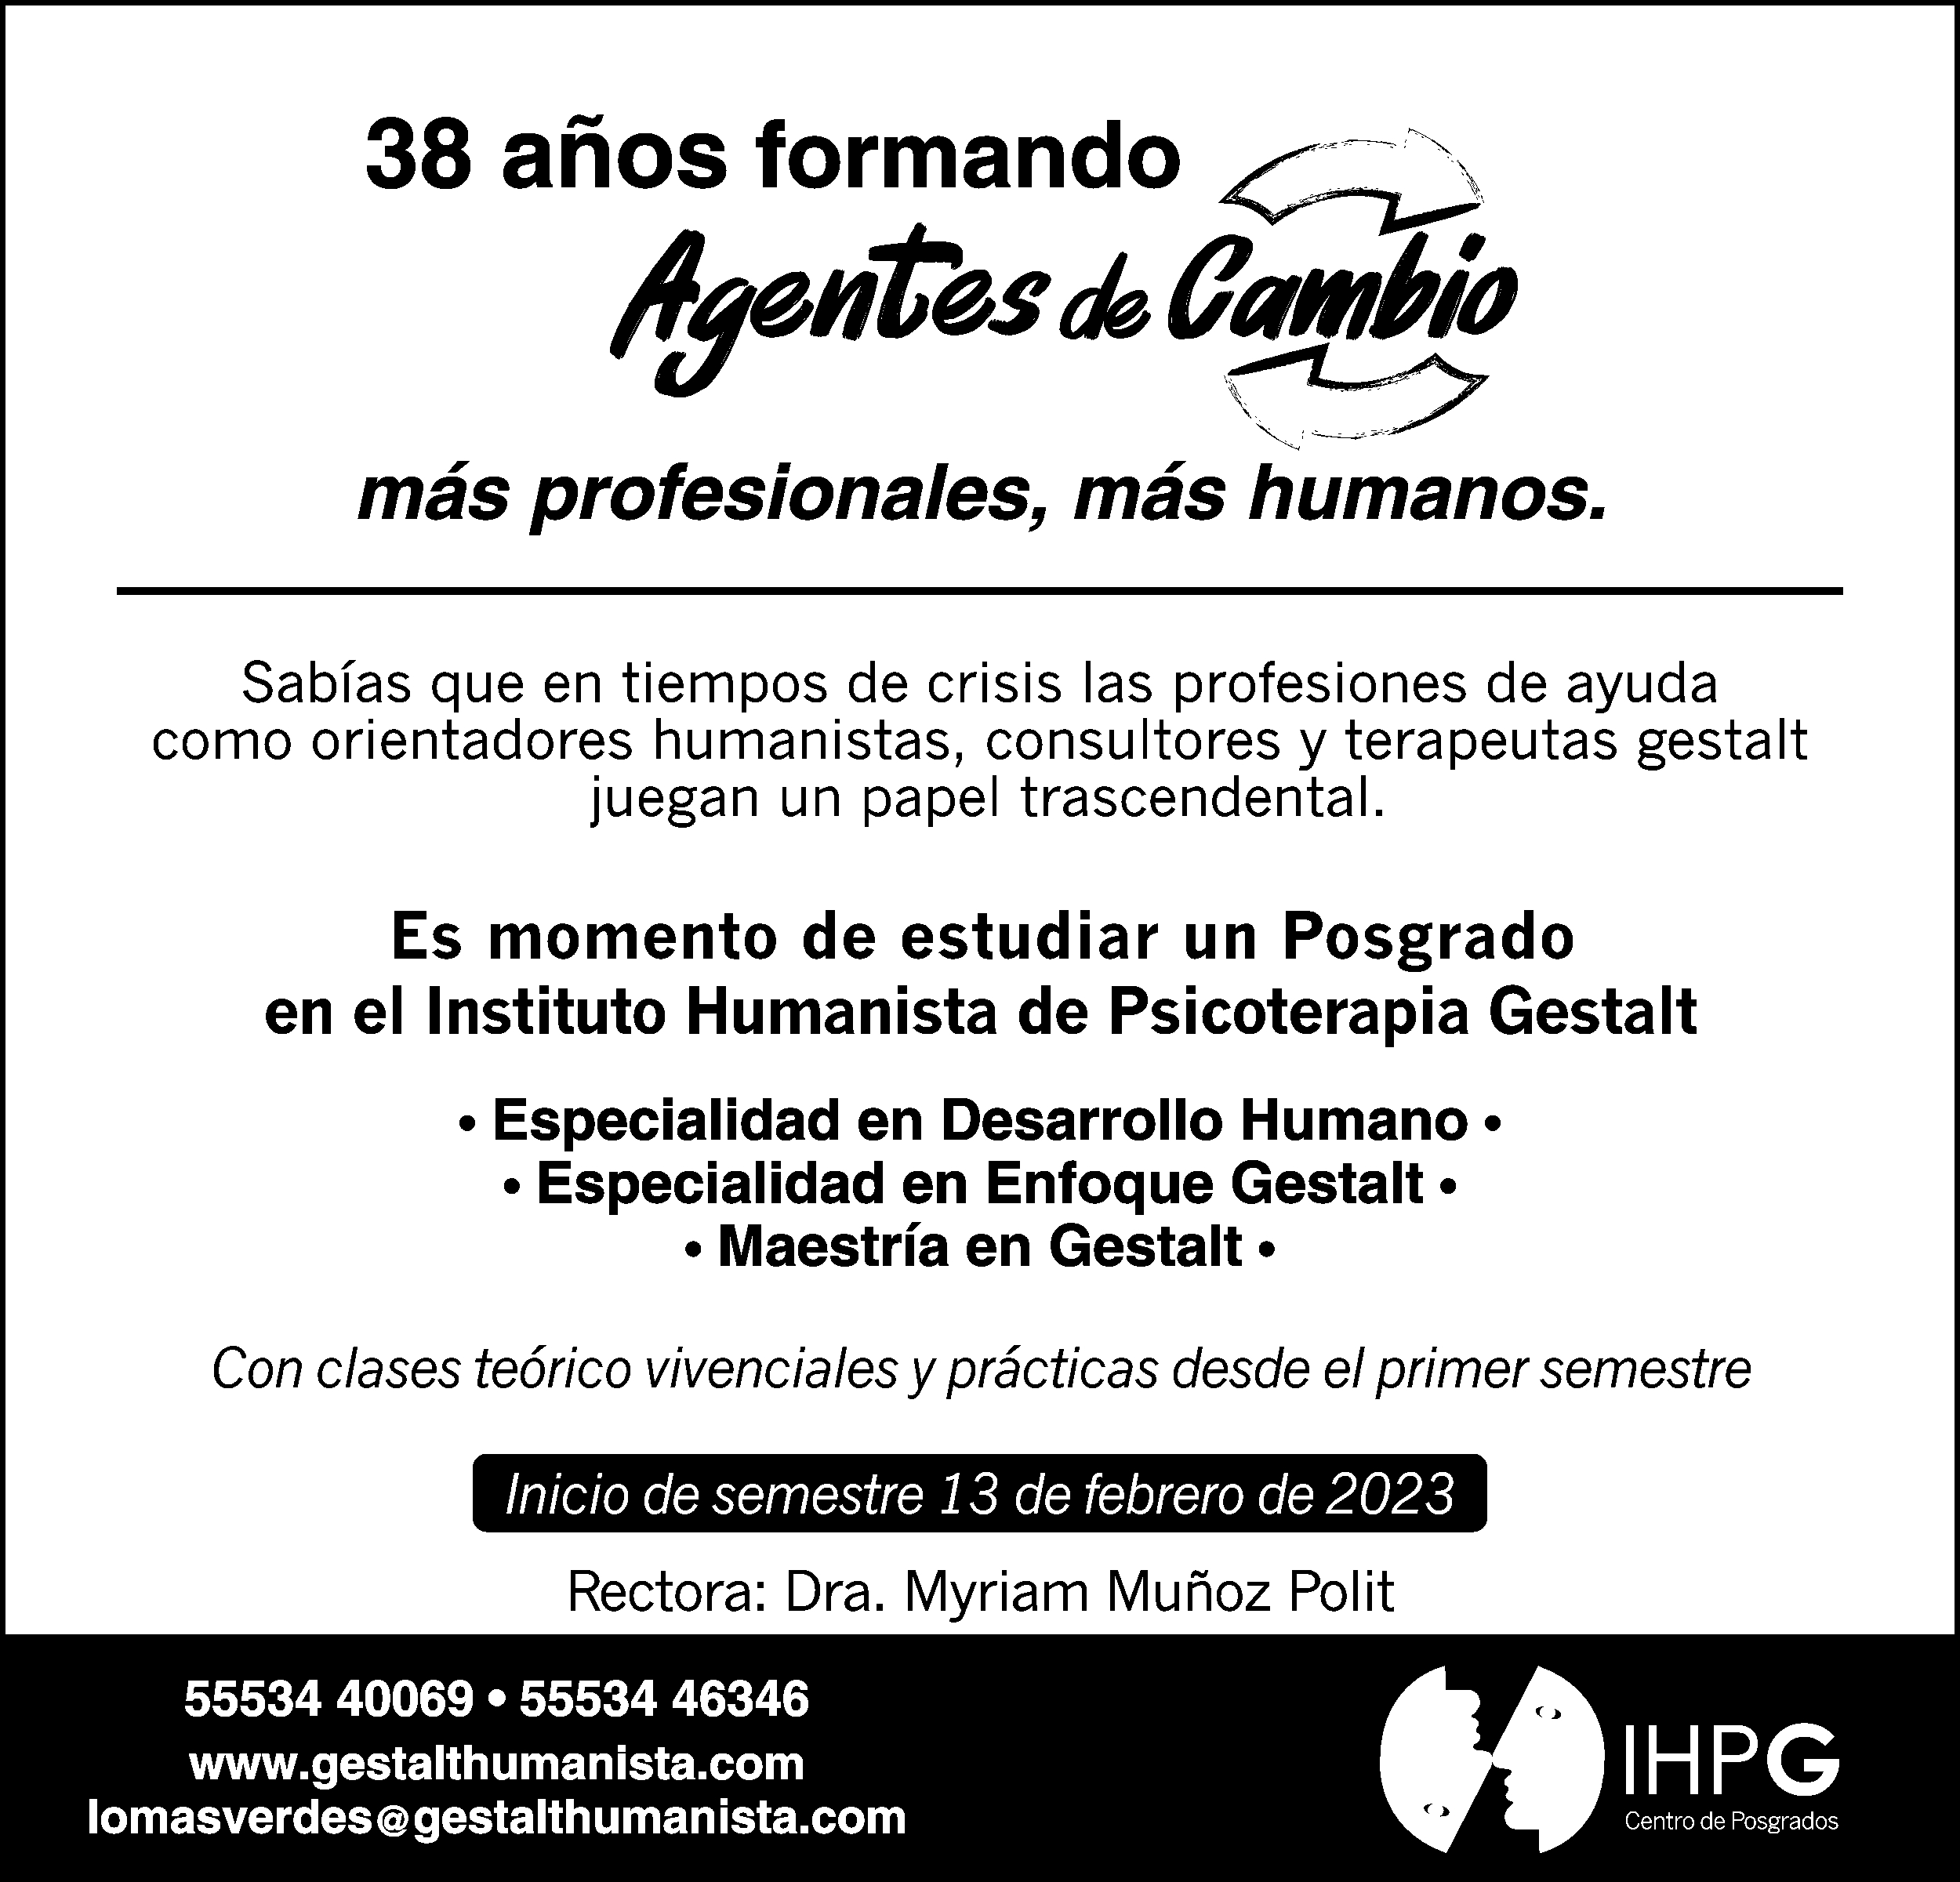 IHPG?CENTRO DE POSGRADOS